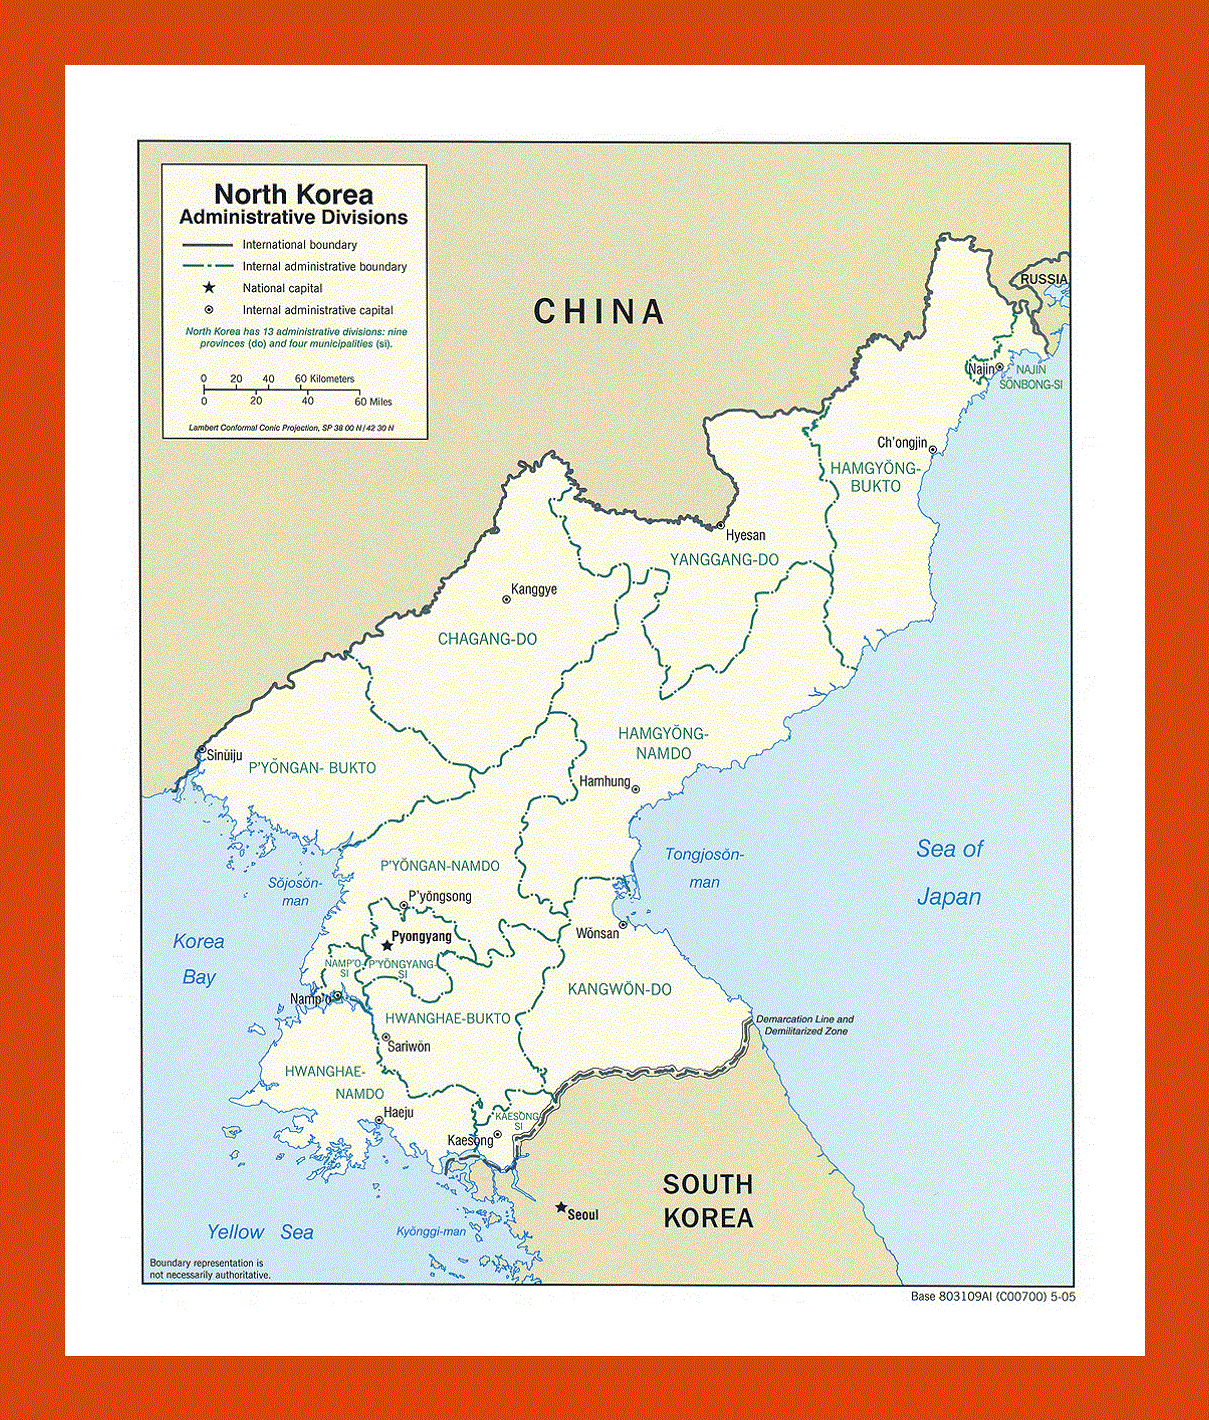 Administrative divisions map of North Korea - 2005